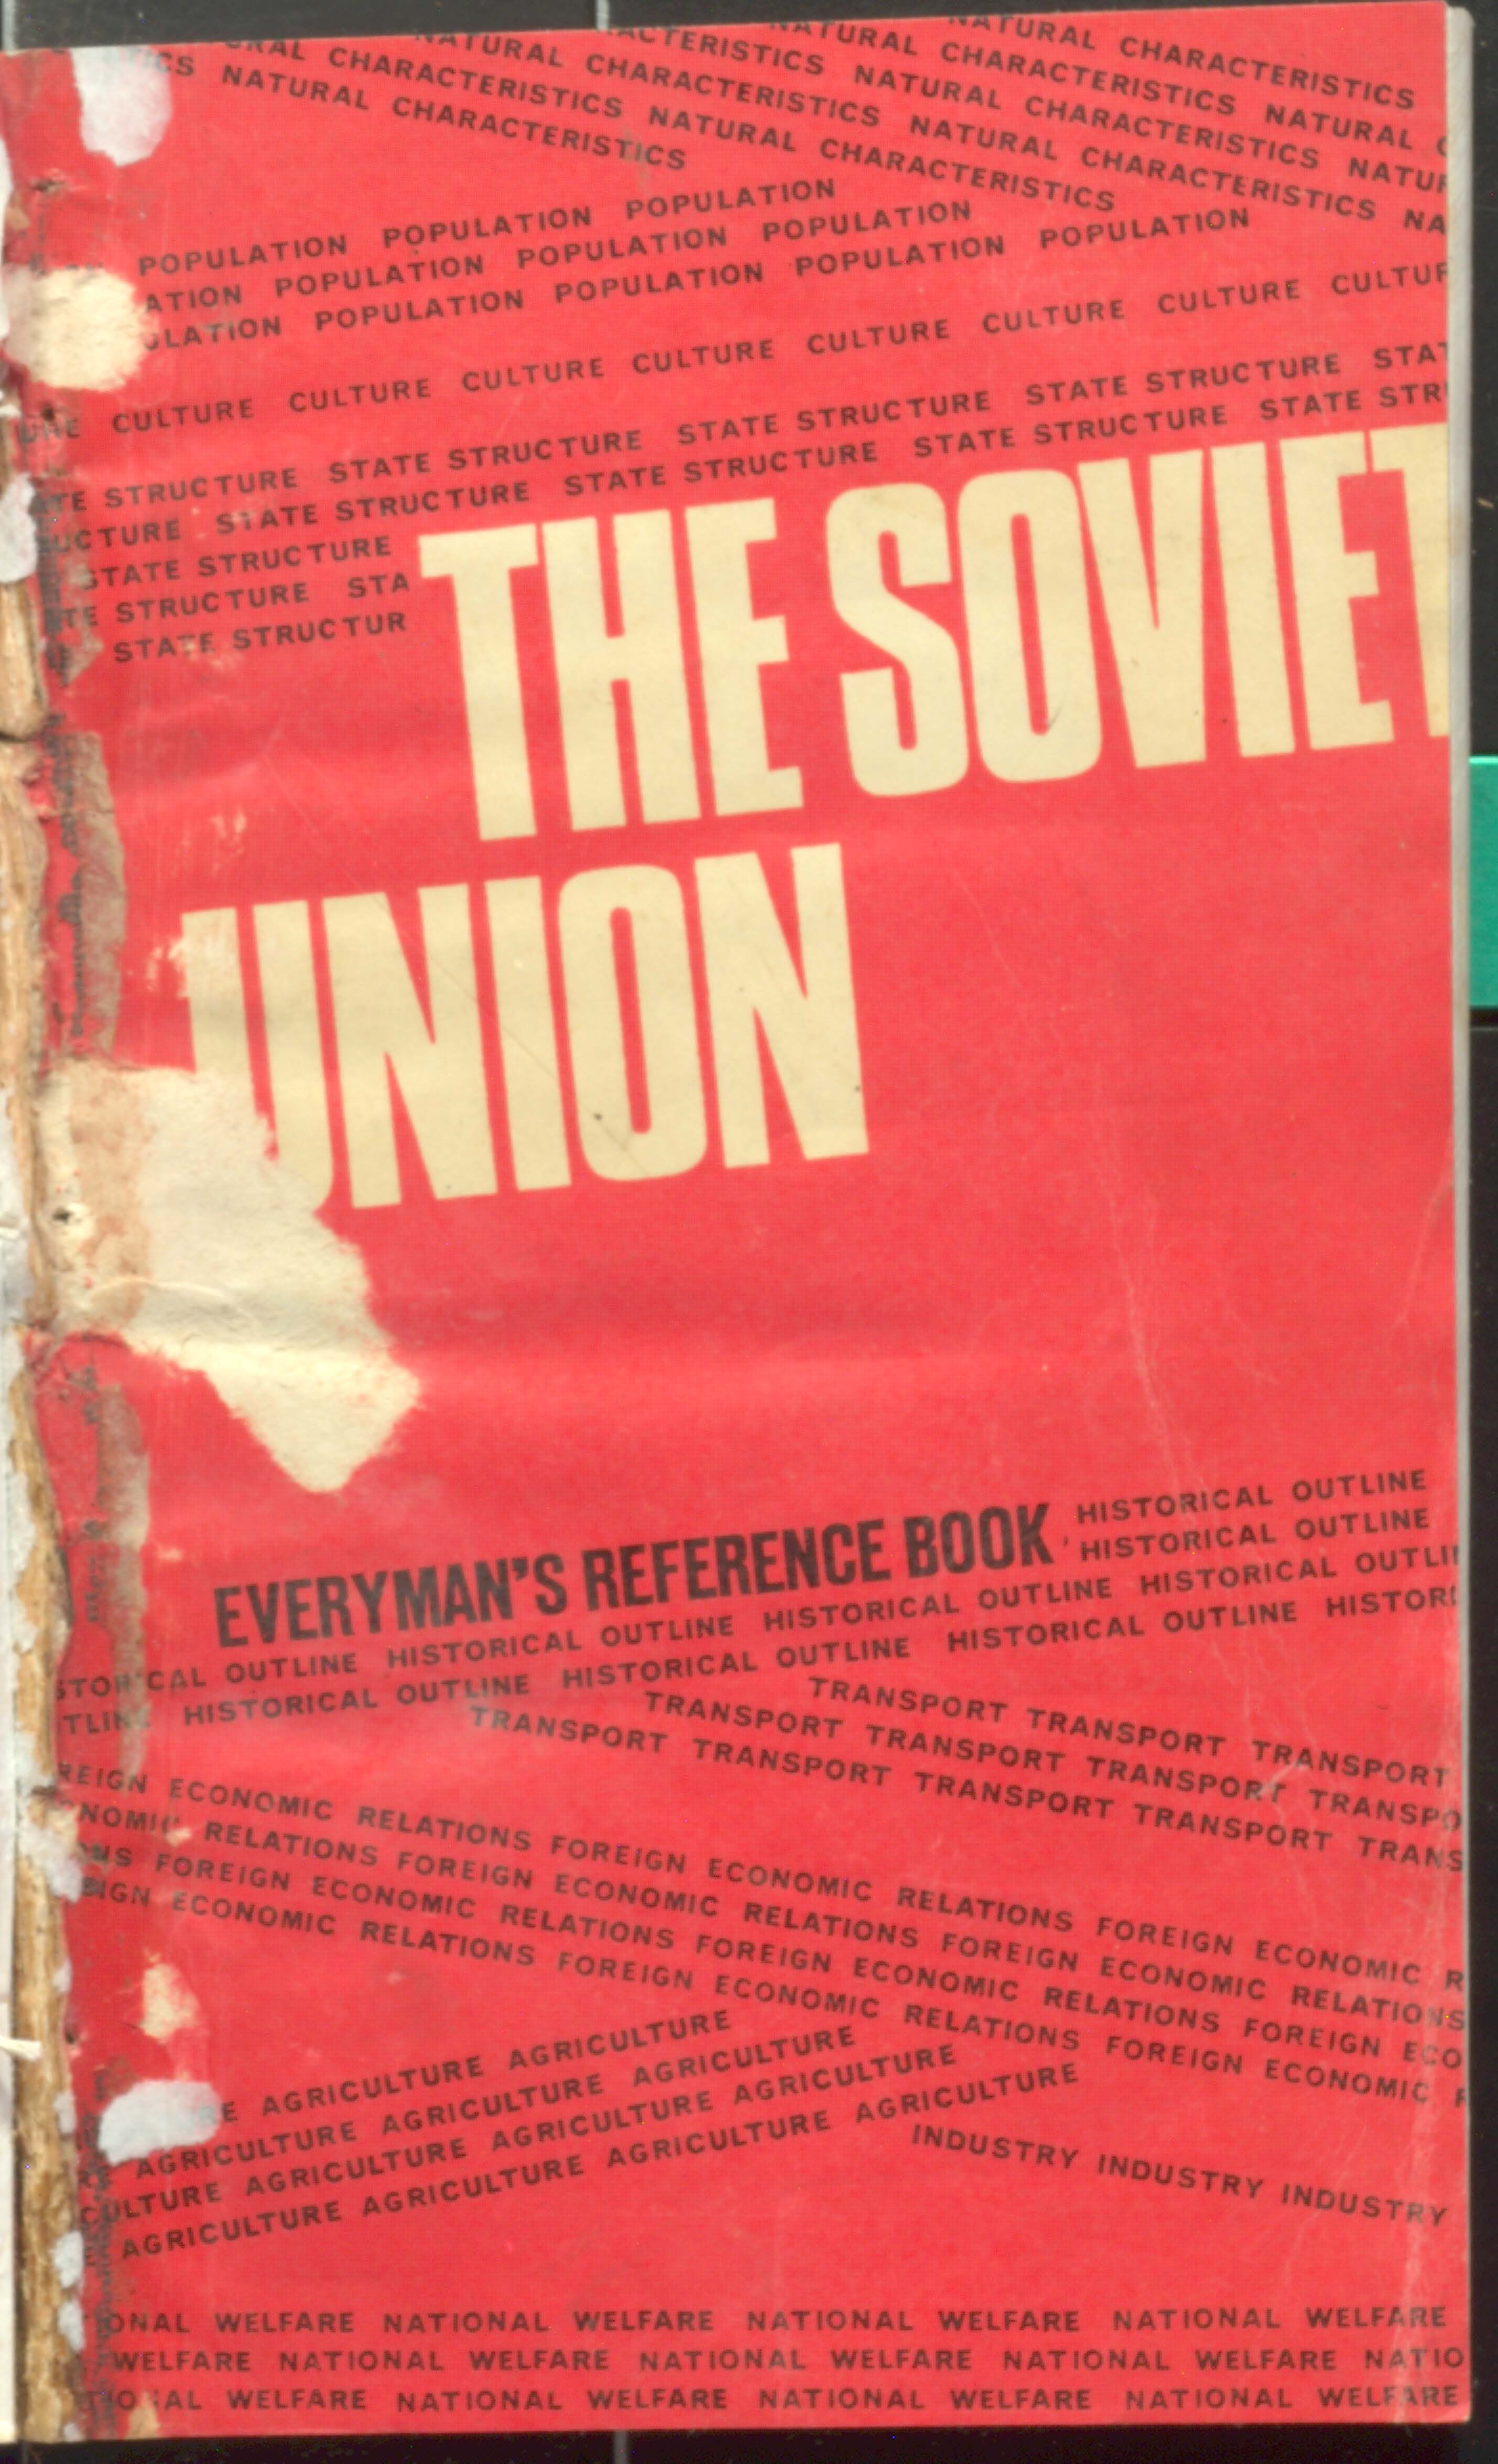 The soviet union